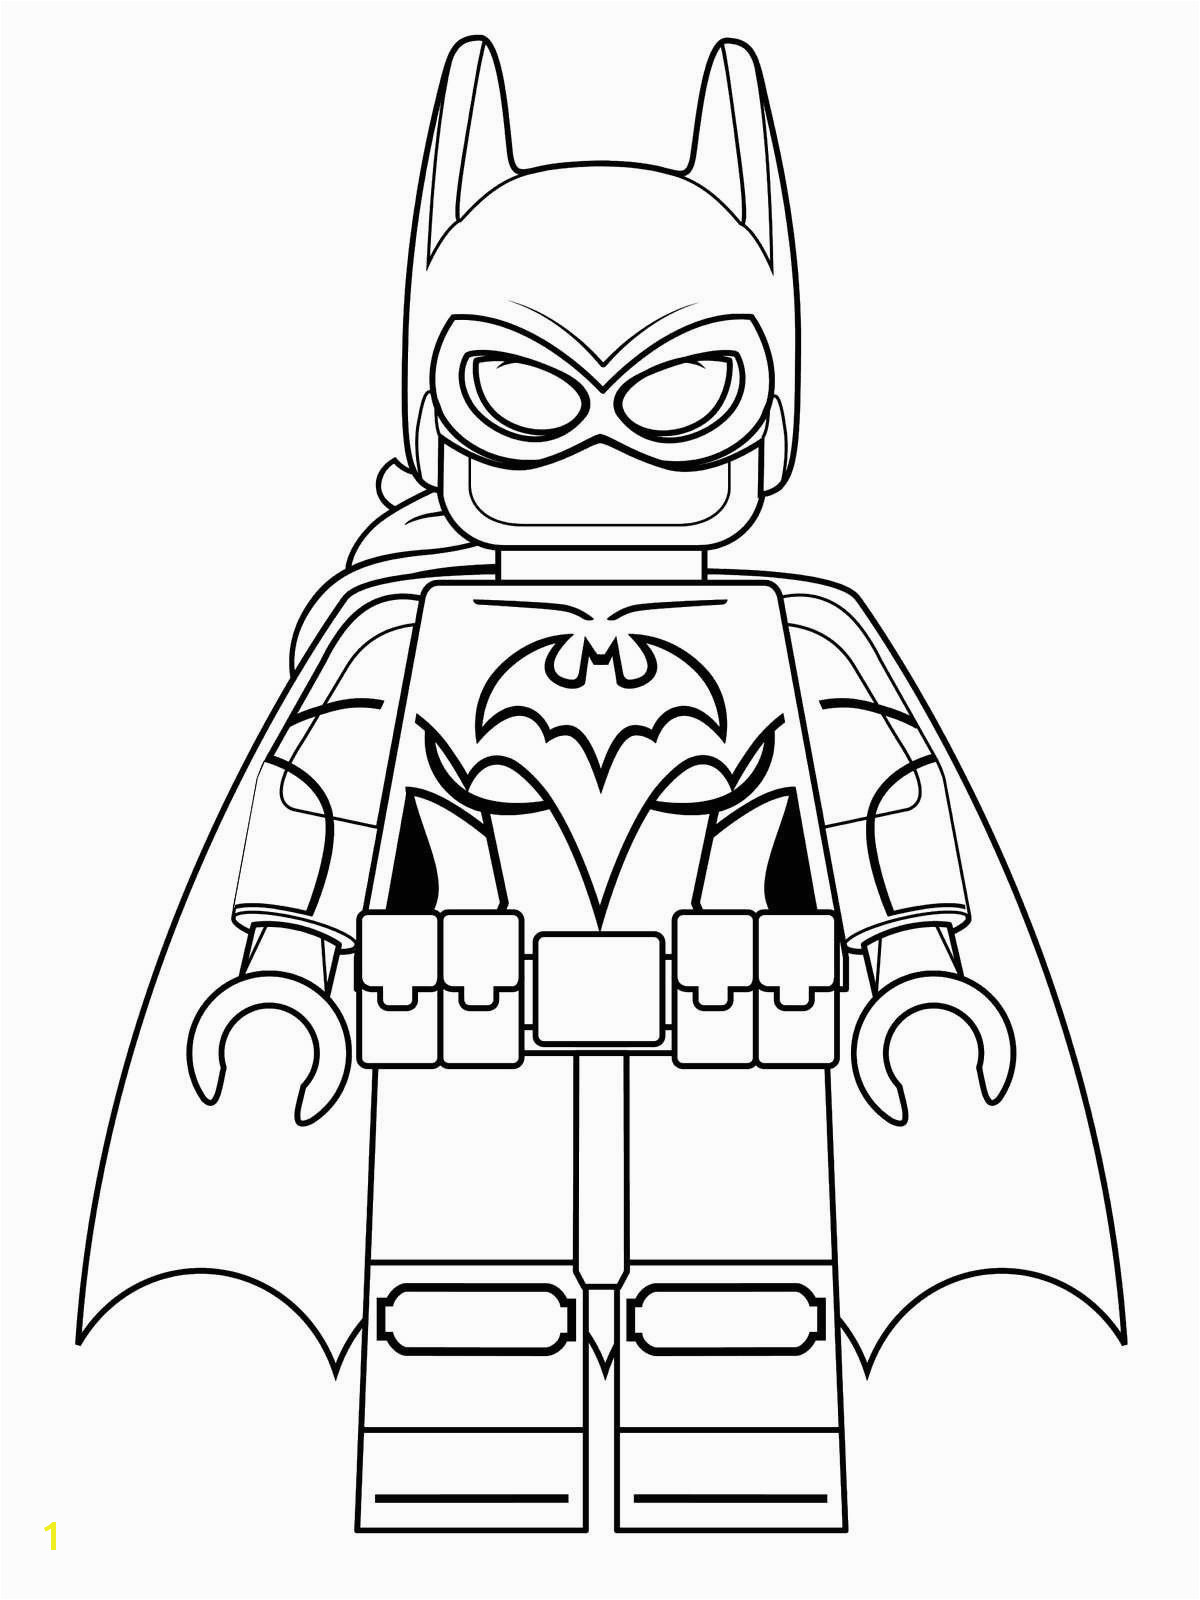 Lego Batman Coloring Page 32 Beste Von Ausmalbild Batman – Große Coloring Page Sammlung